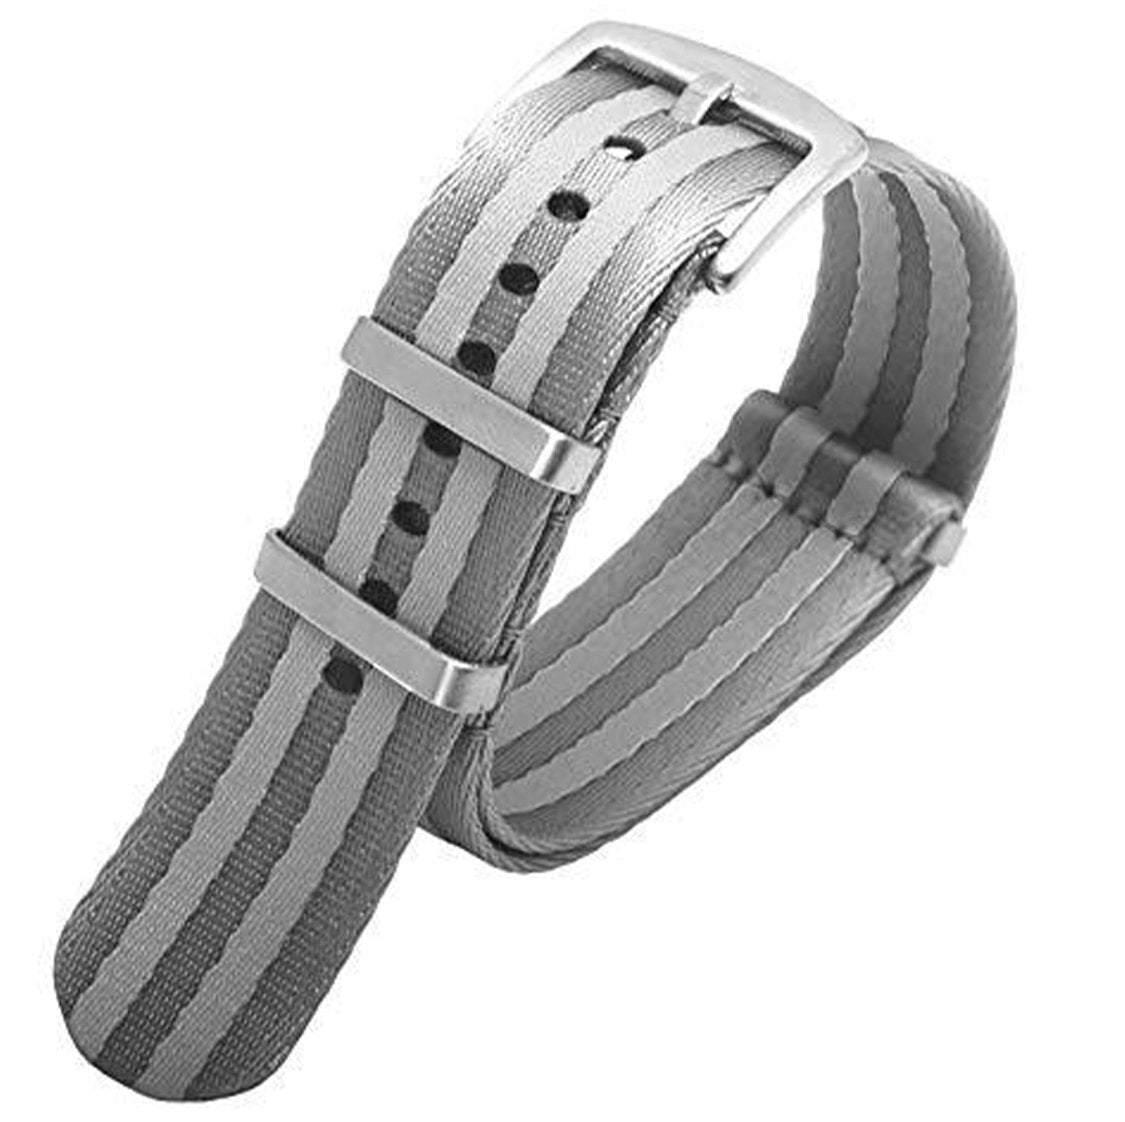 Seatbelt Ballistic Nylon Strap Grey with Silver Stripe -StrapSeeker